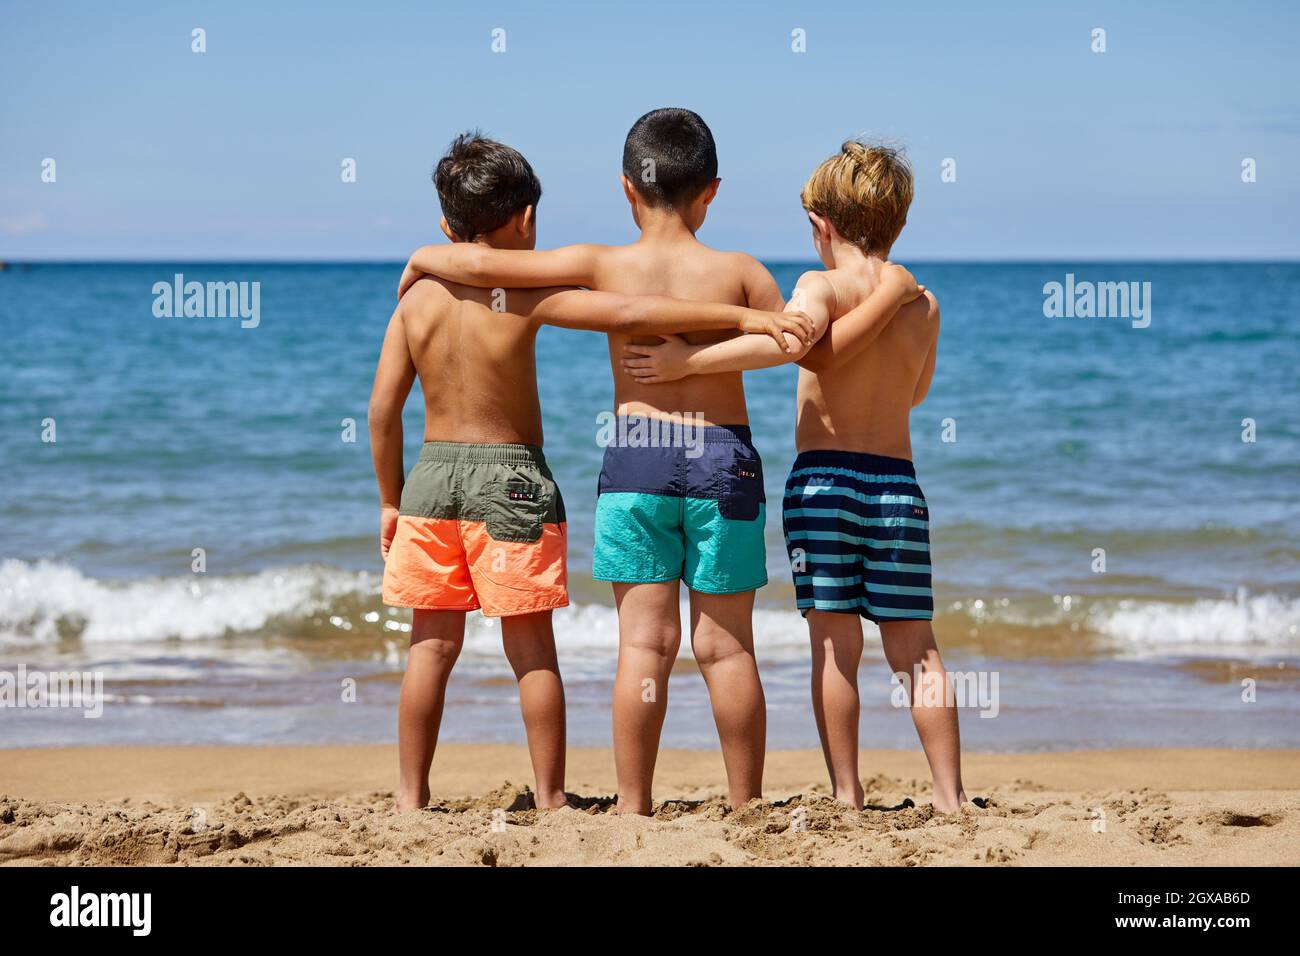 Kinder 5-10 Jahre alt, spielen am Strand, Zumaia, Gipuzkoa, Baskenland, Spanien Stockfoto